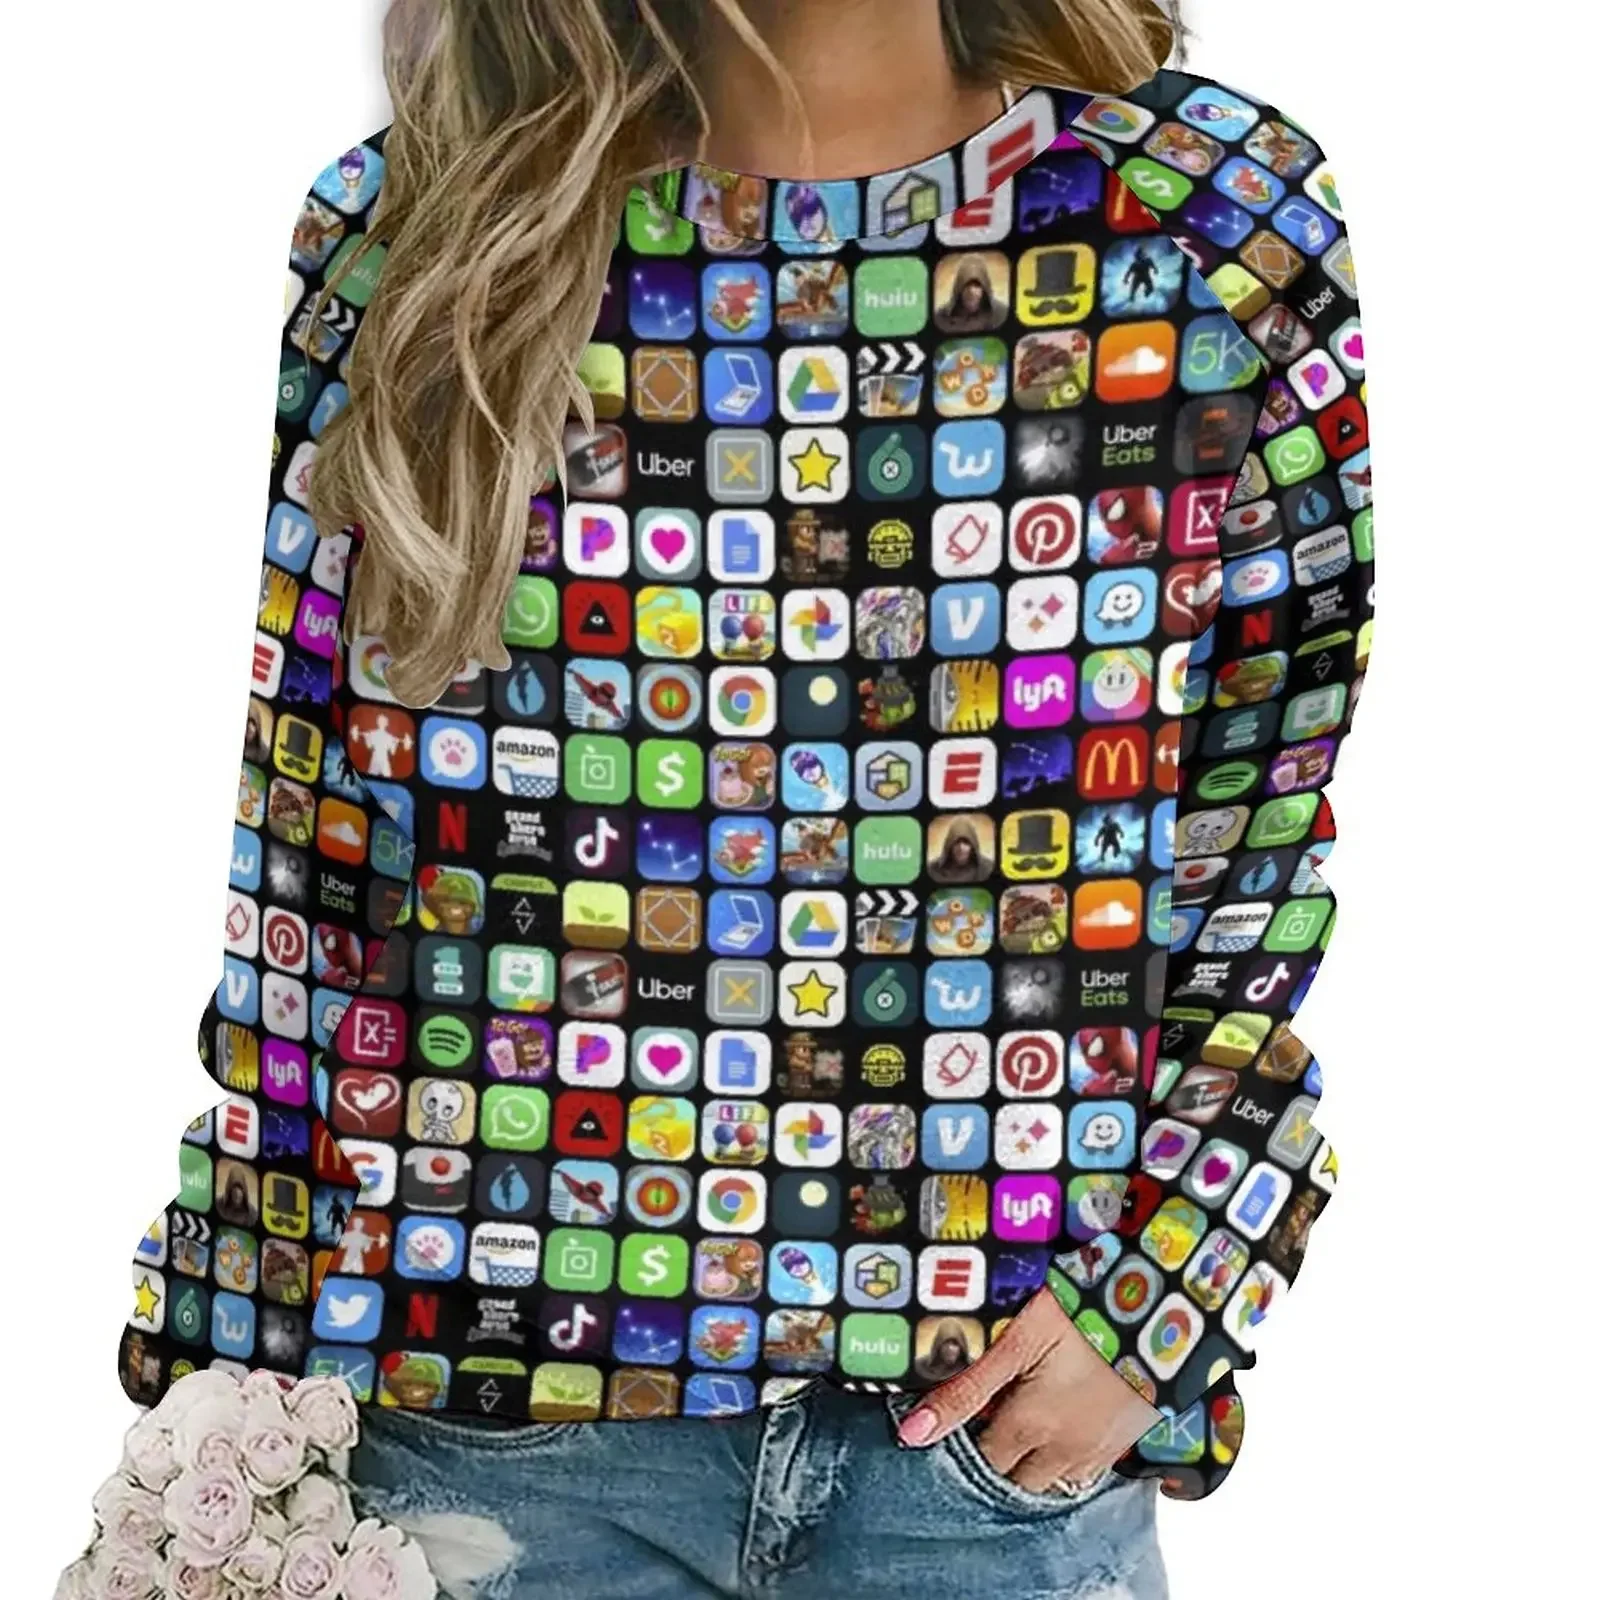 

Meme Collage Print Hoodies Woman Wall of Apps Street Style Casual Hoodie Winter Long Sleeve Cute Pattern Sweatshirts Big Size